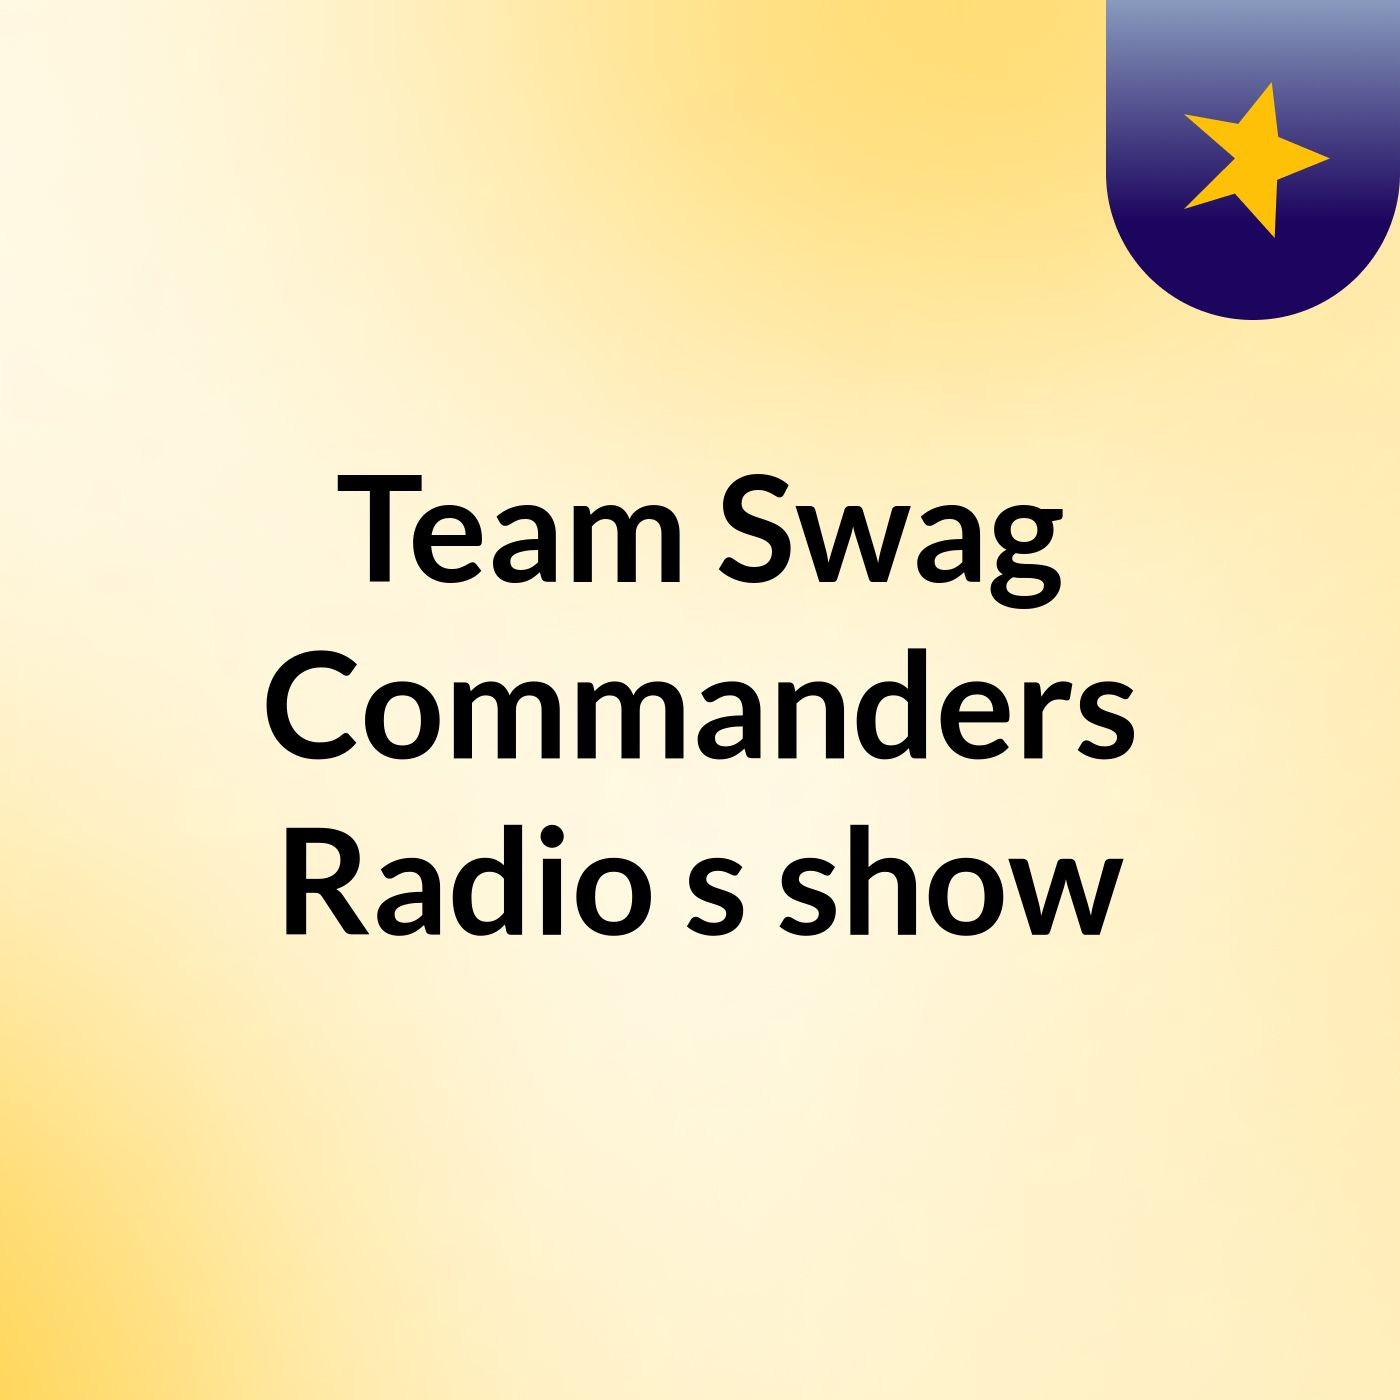 Team Swag Commanders Radio's show